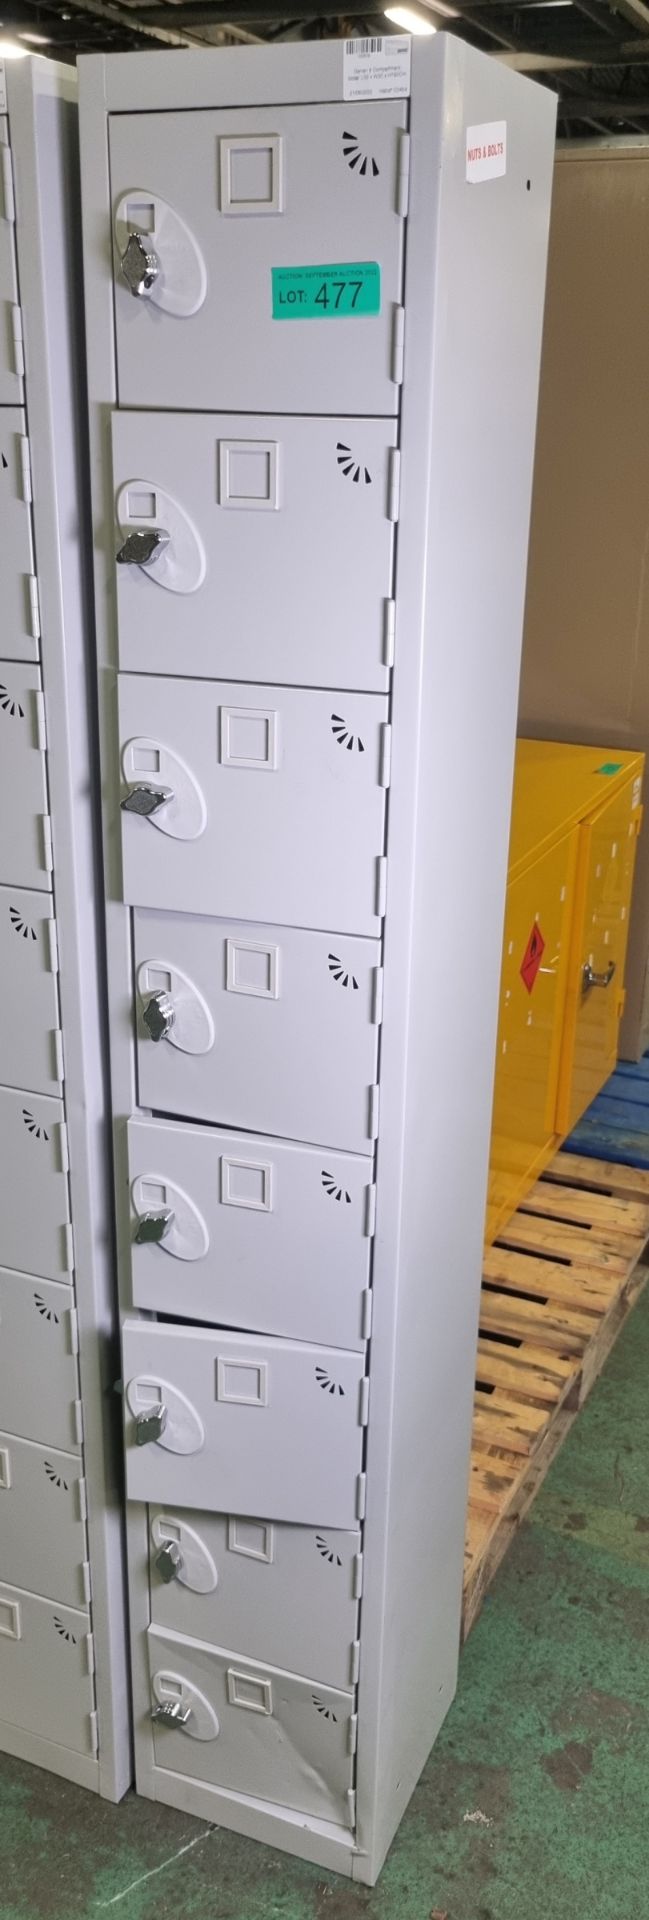 Garran 8 Compartment locker L30 x W30 x H180 cm - Image 2 of 4